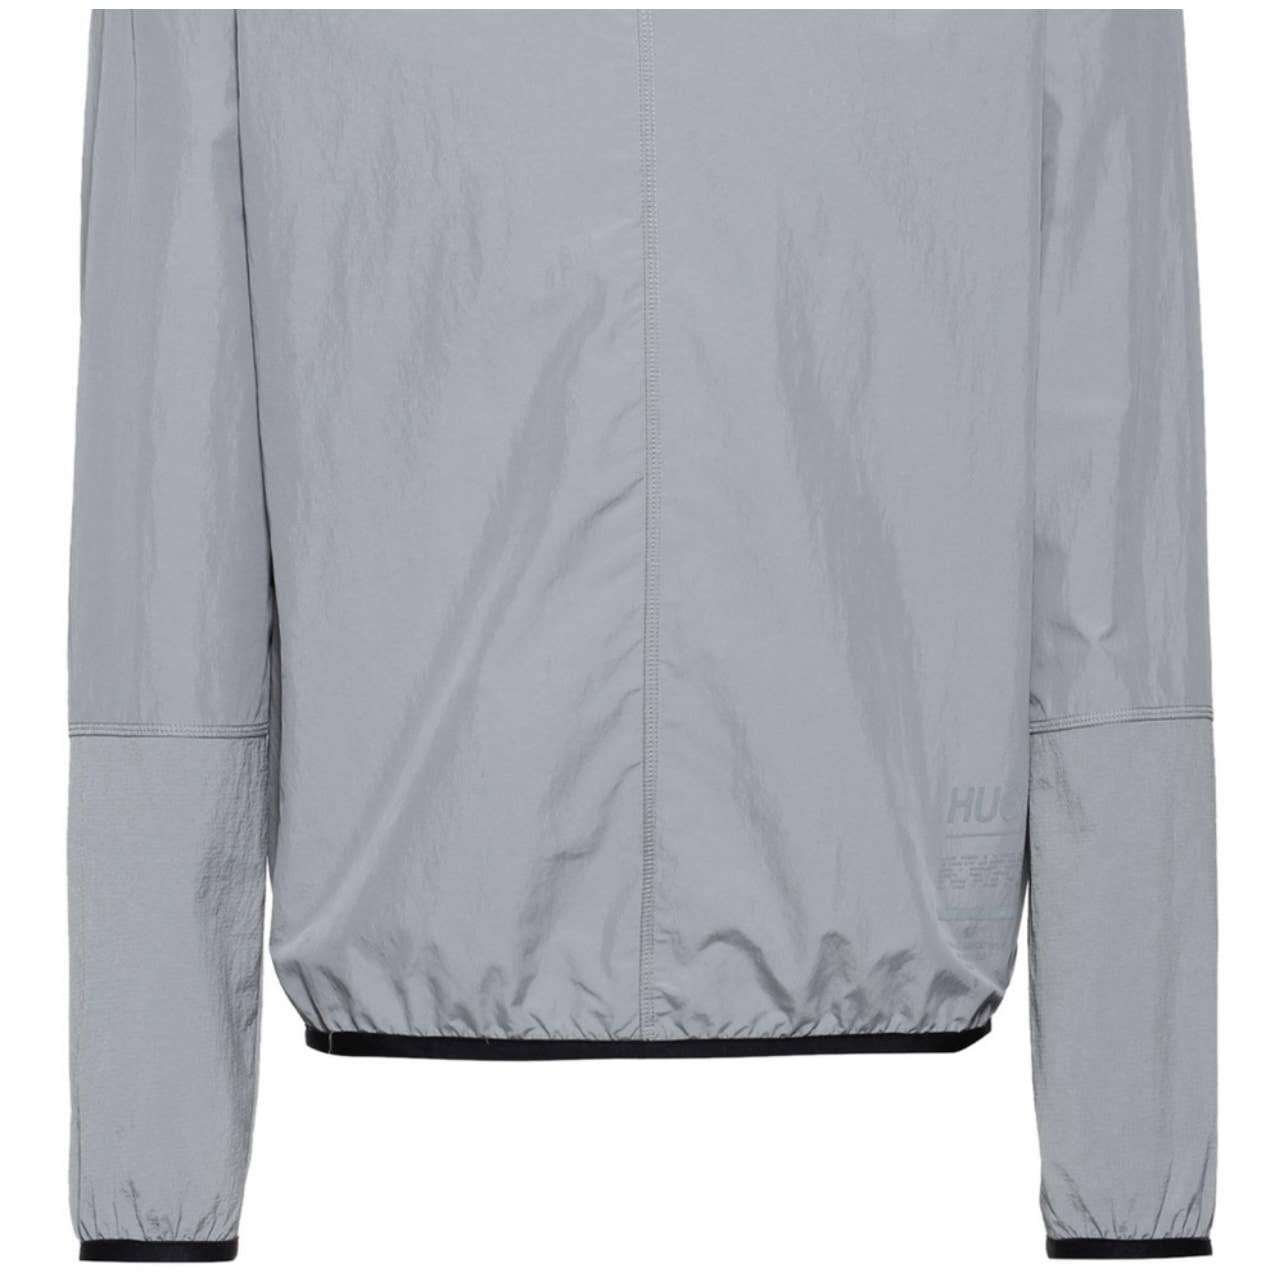 Hugo Boss Men's "Dennon" Silver Crewneck Sweatshirt w/ Reflective Detail, Size M